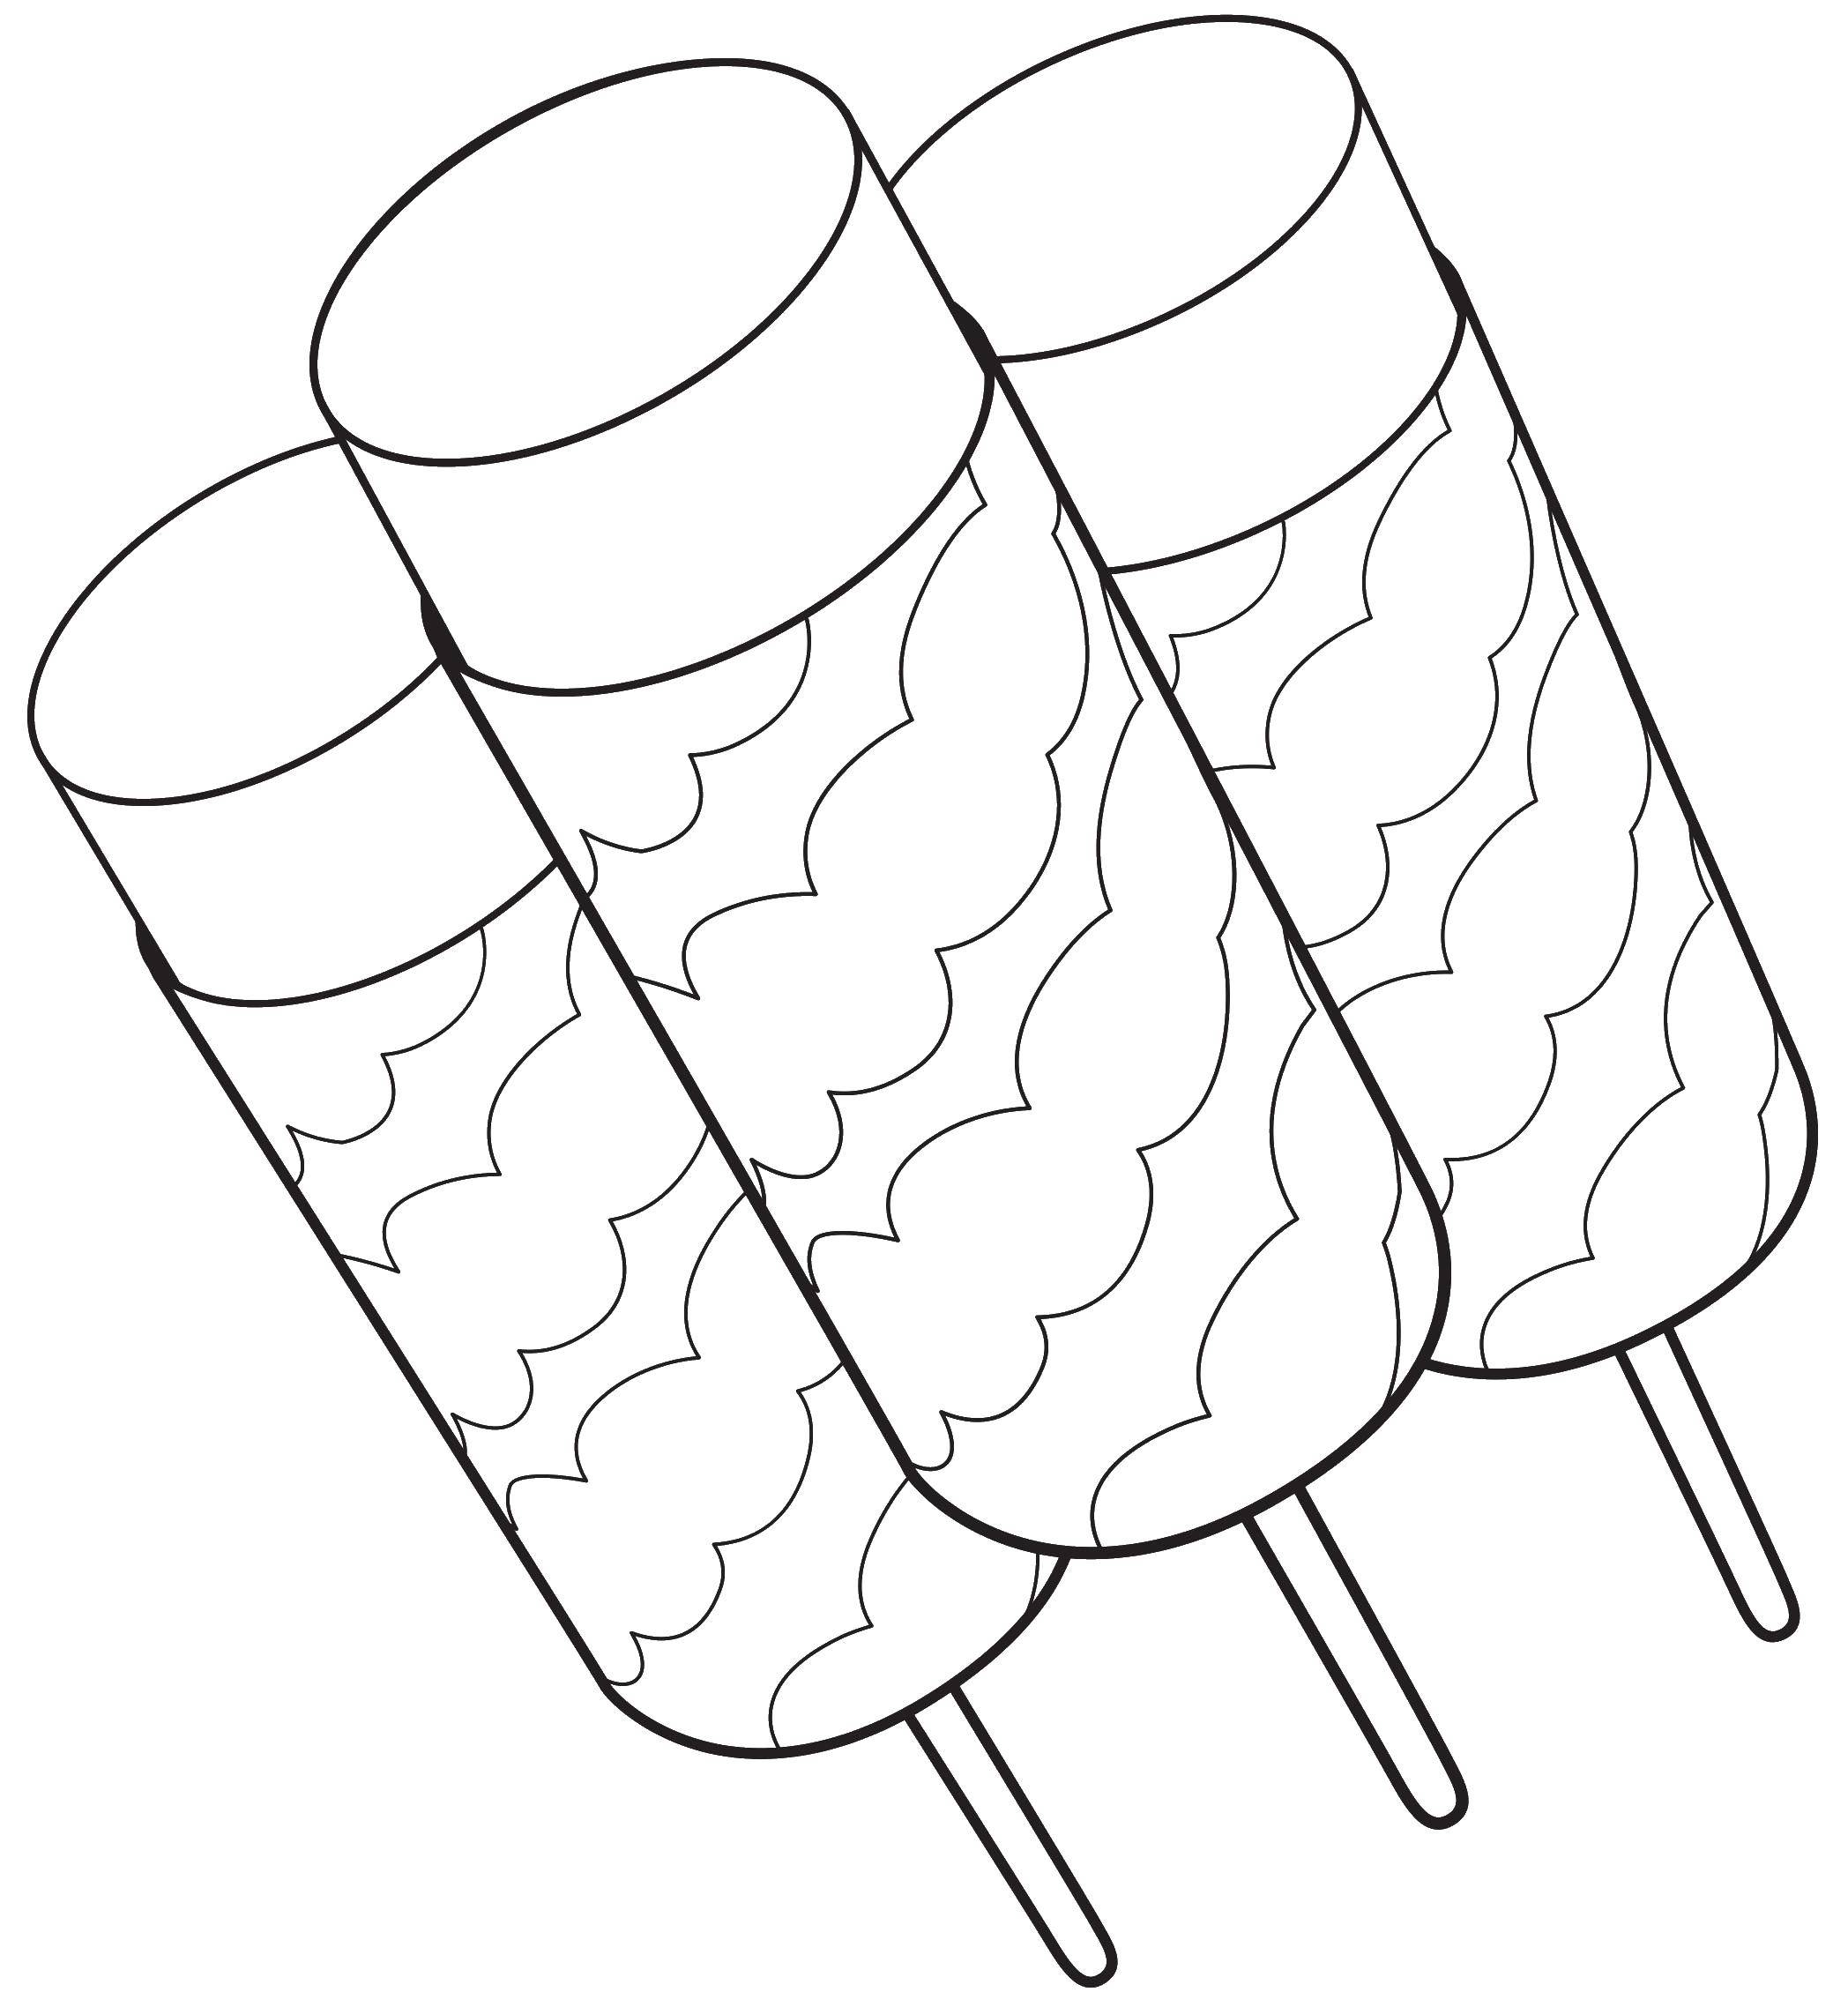 Coloring Ice cream palochkoi. Category ice cream. Tags:  ice cream.